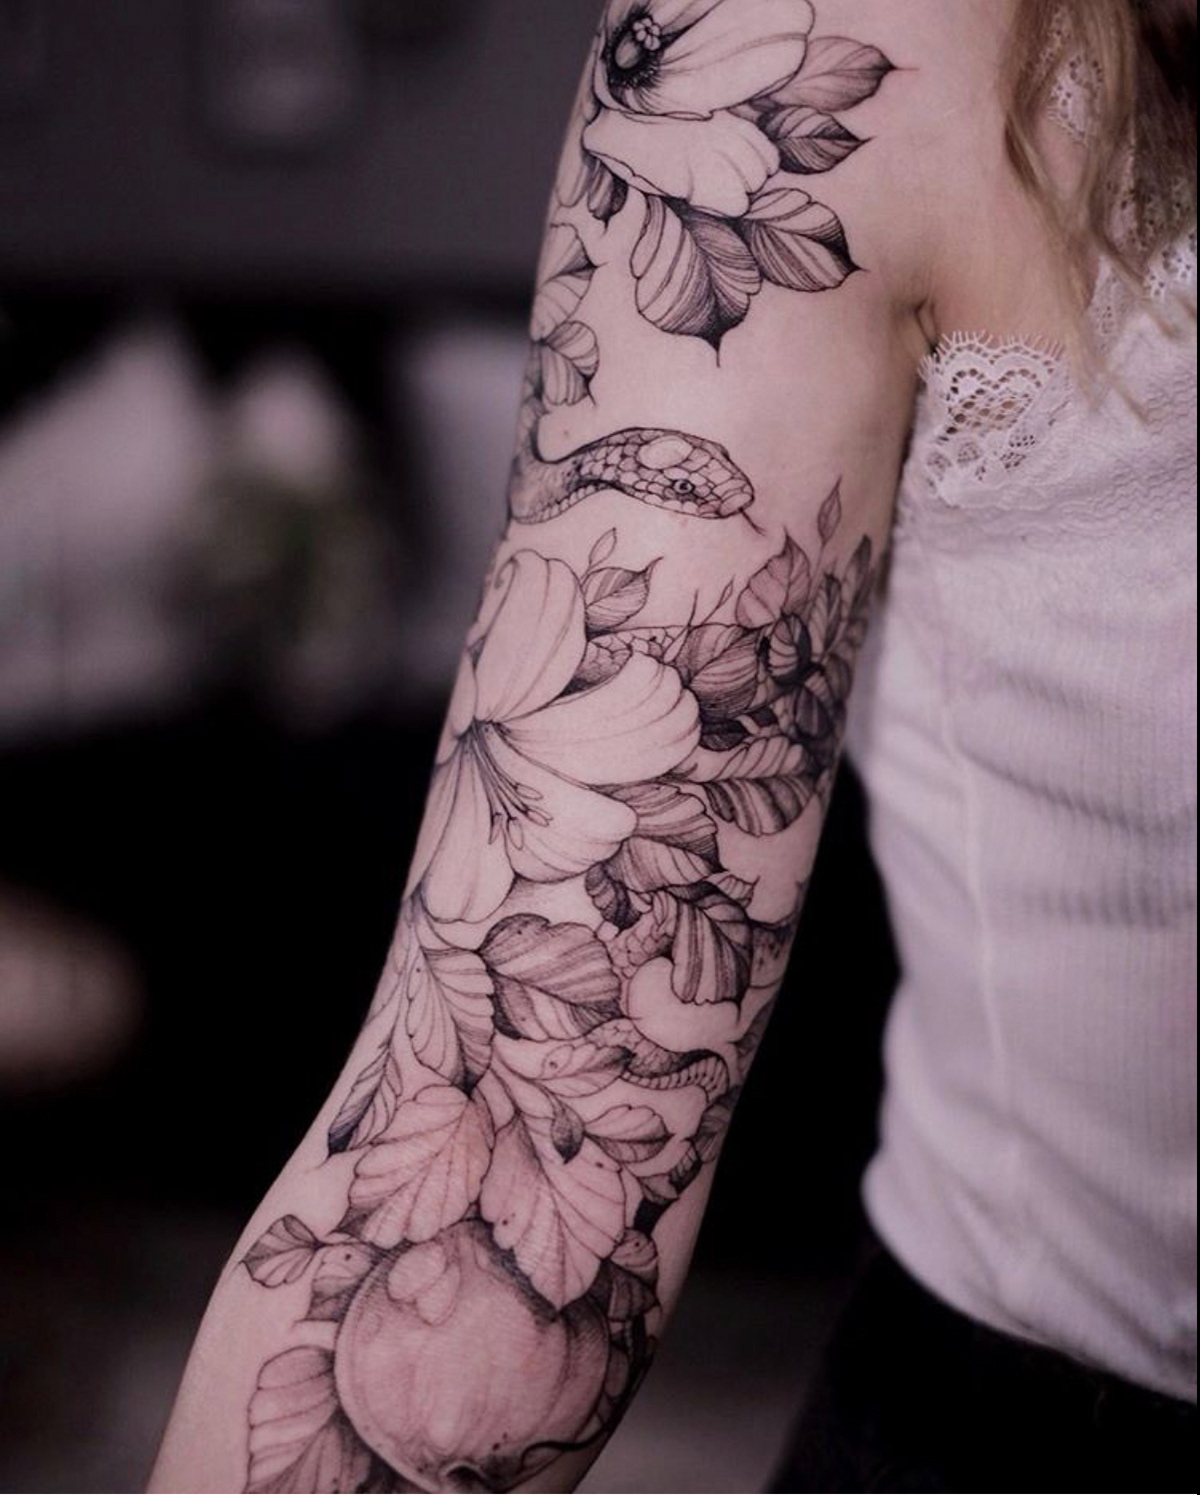  art body art fern Flowers inspiration tattoo Tattoo Art tattoo design tattoo flowers Tattoo Inspiration